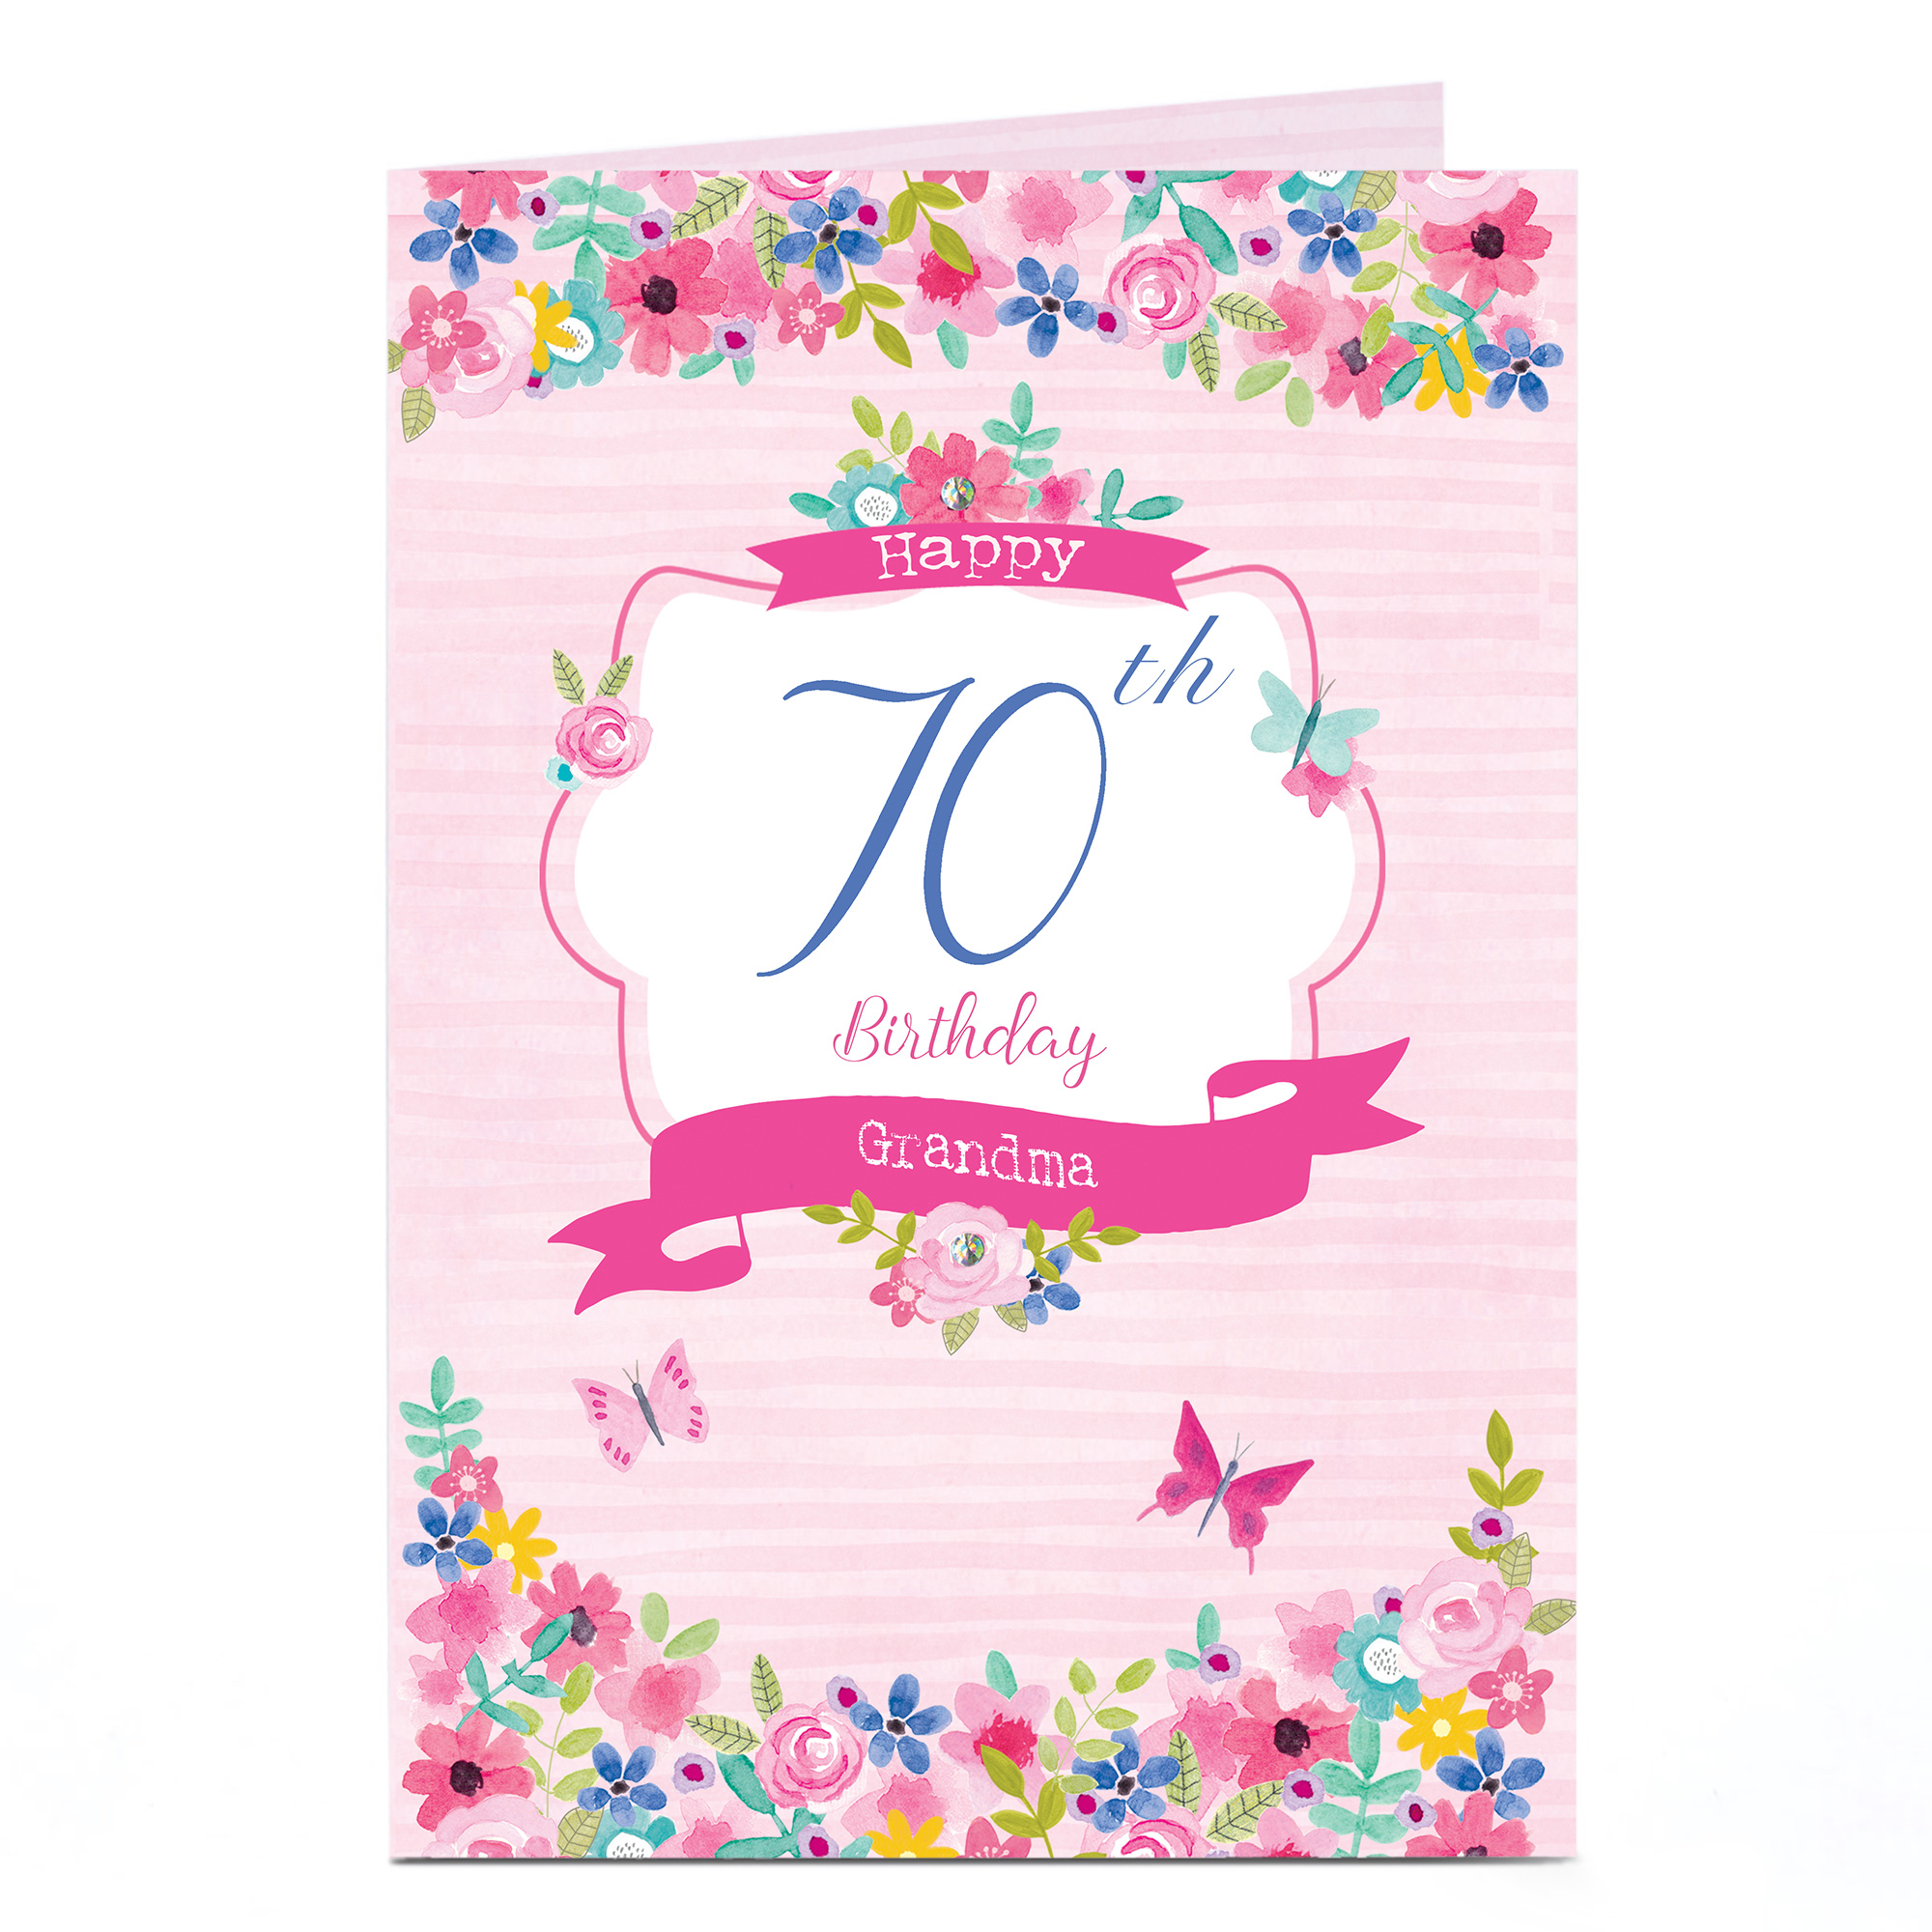 Personalised Editable Age Birthday Card - Floral Grandma